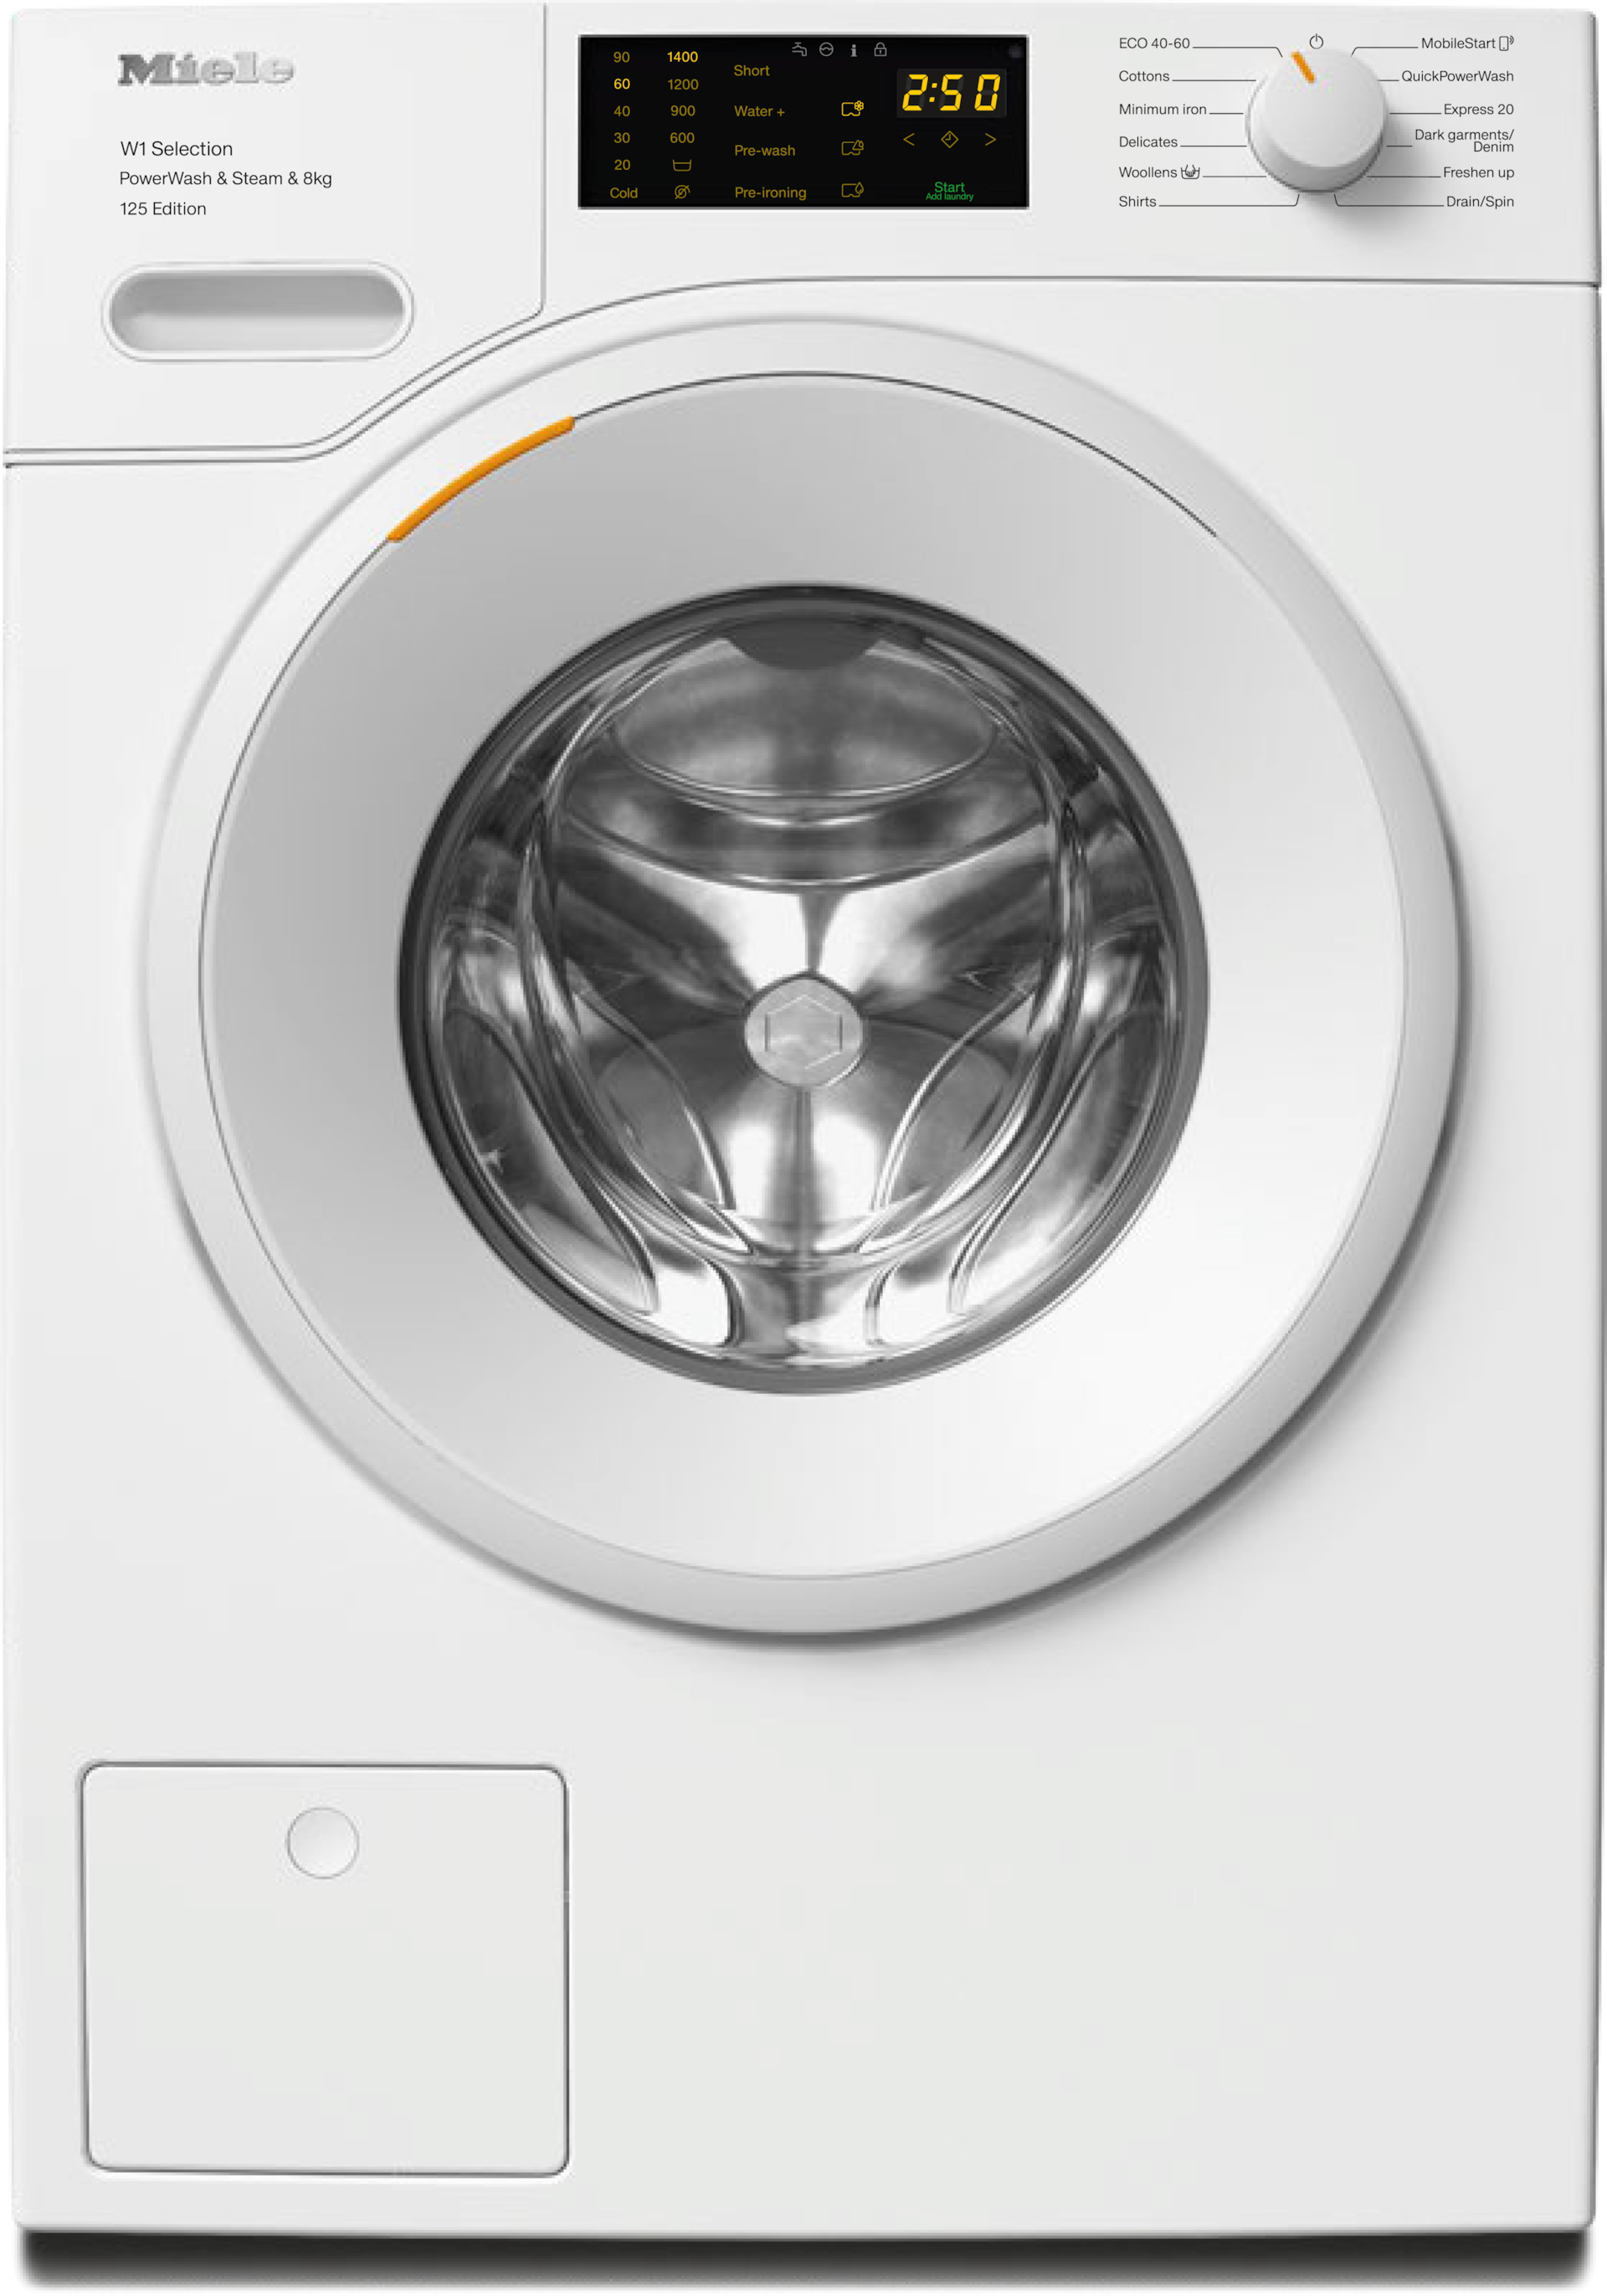 Mașini de spălat - WSB383 WCS 125 Edition - 1